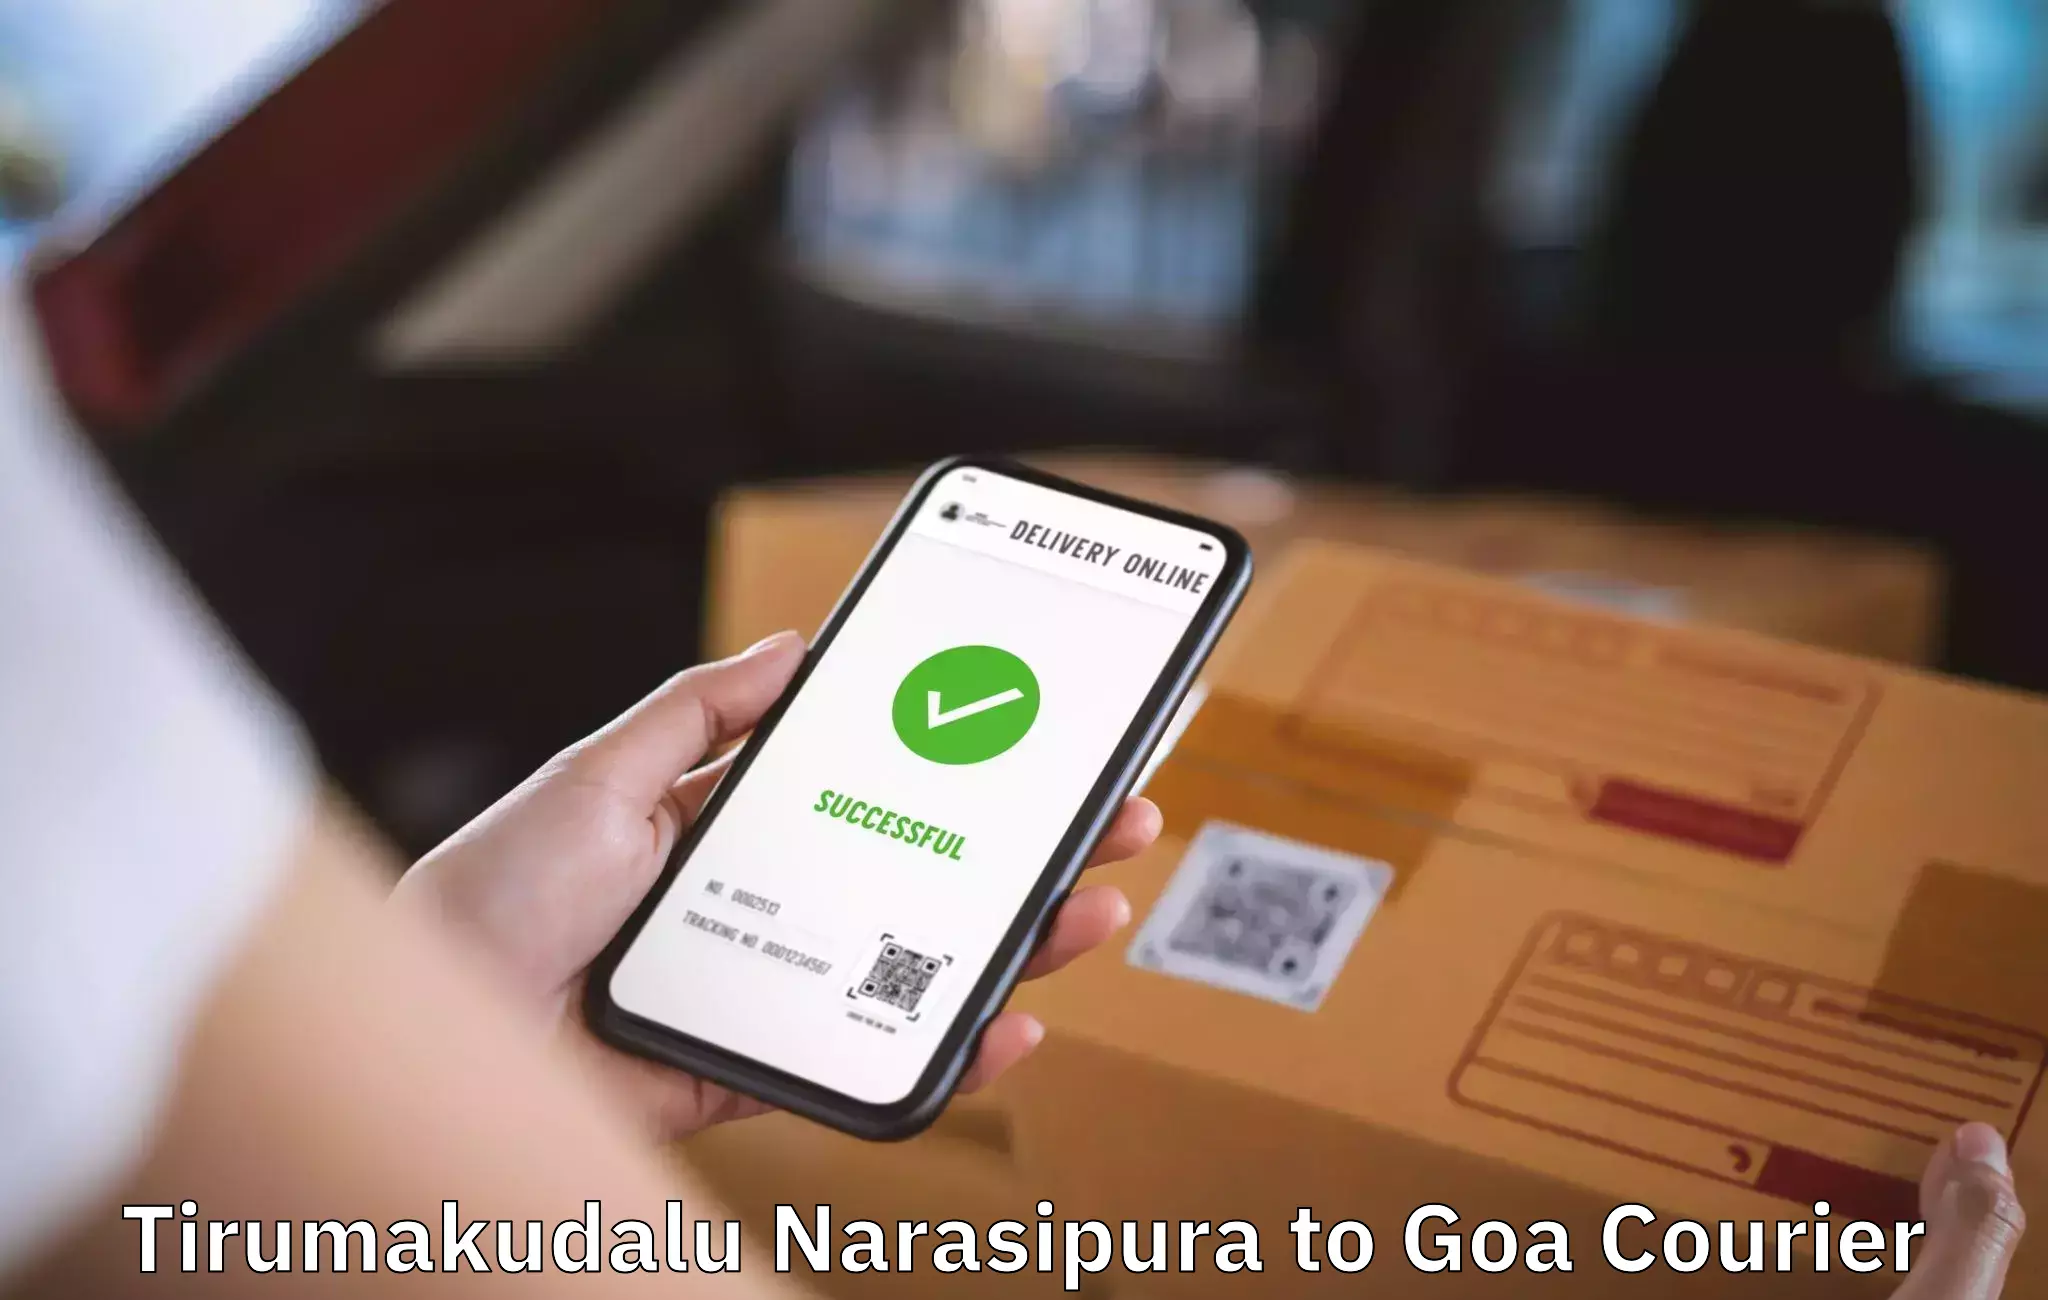 Premium moving services Tirumakudalu Narasipura to South Goa